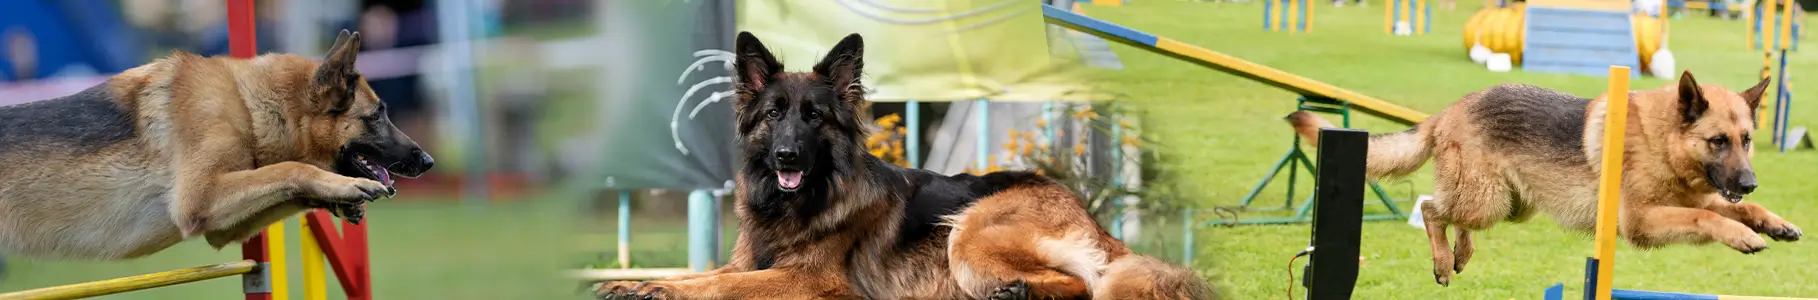 Royal Canin Ring Dog Show Venue